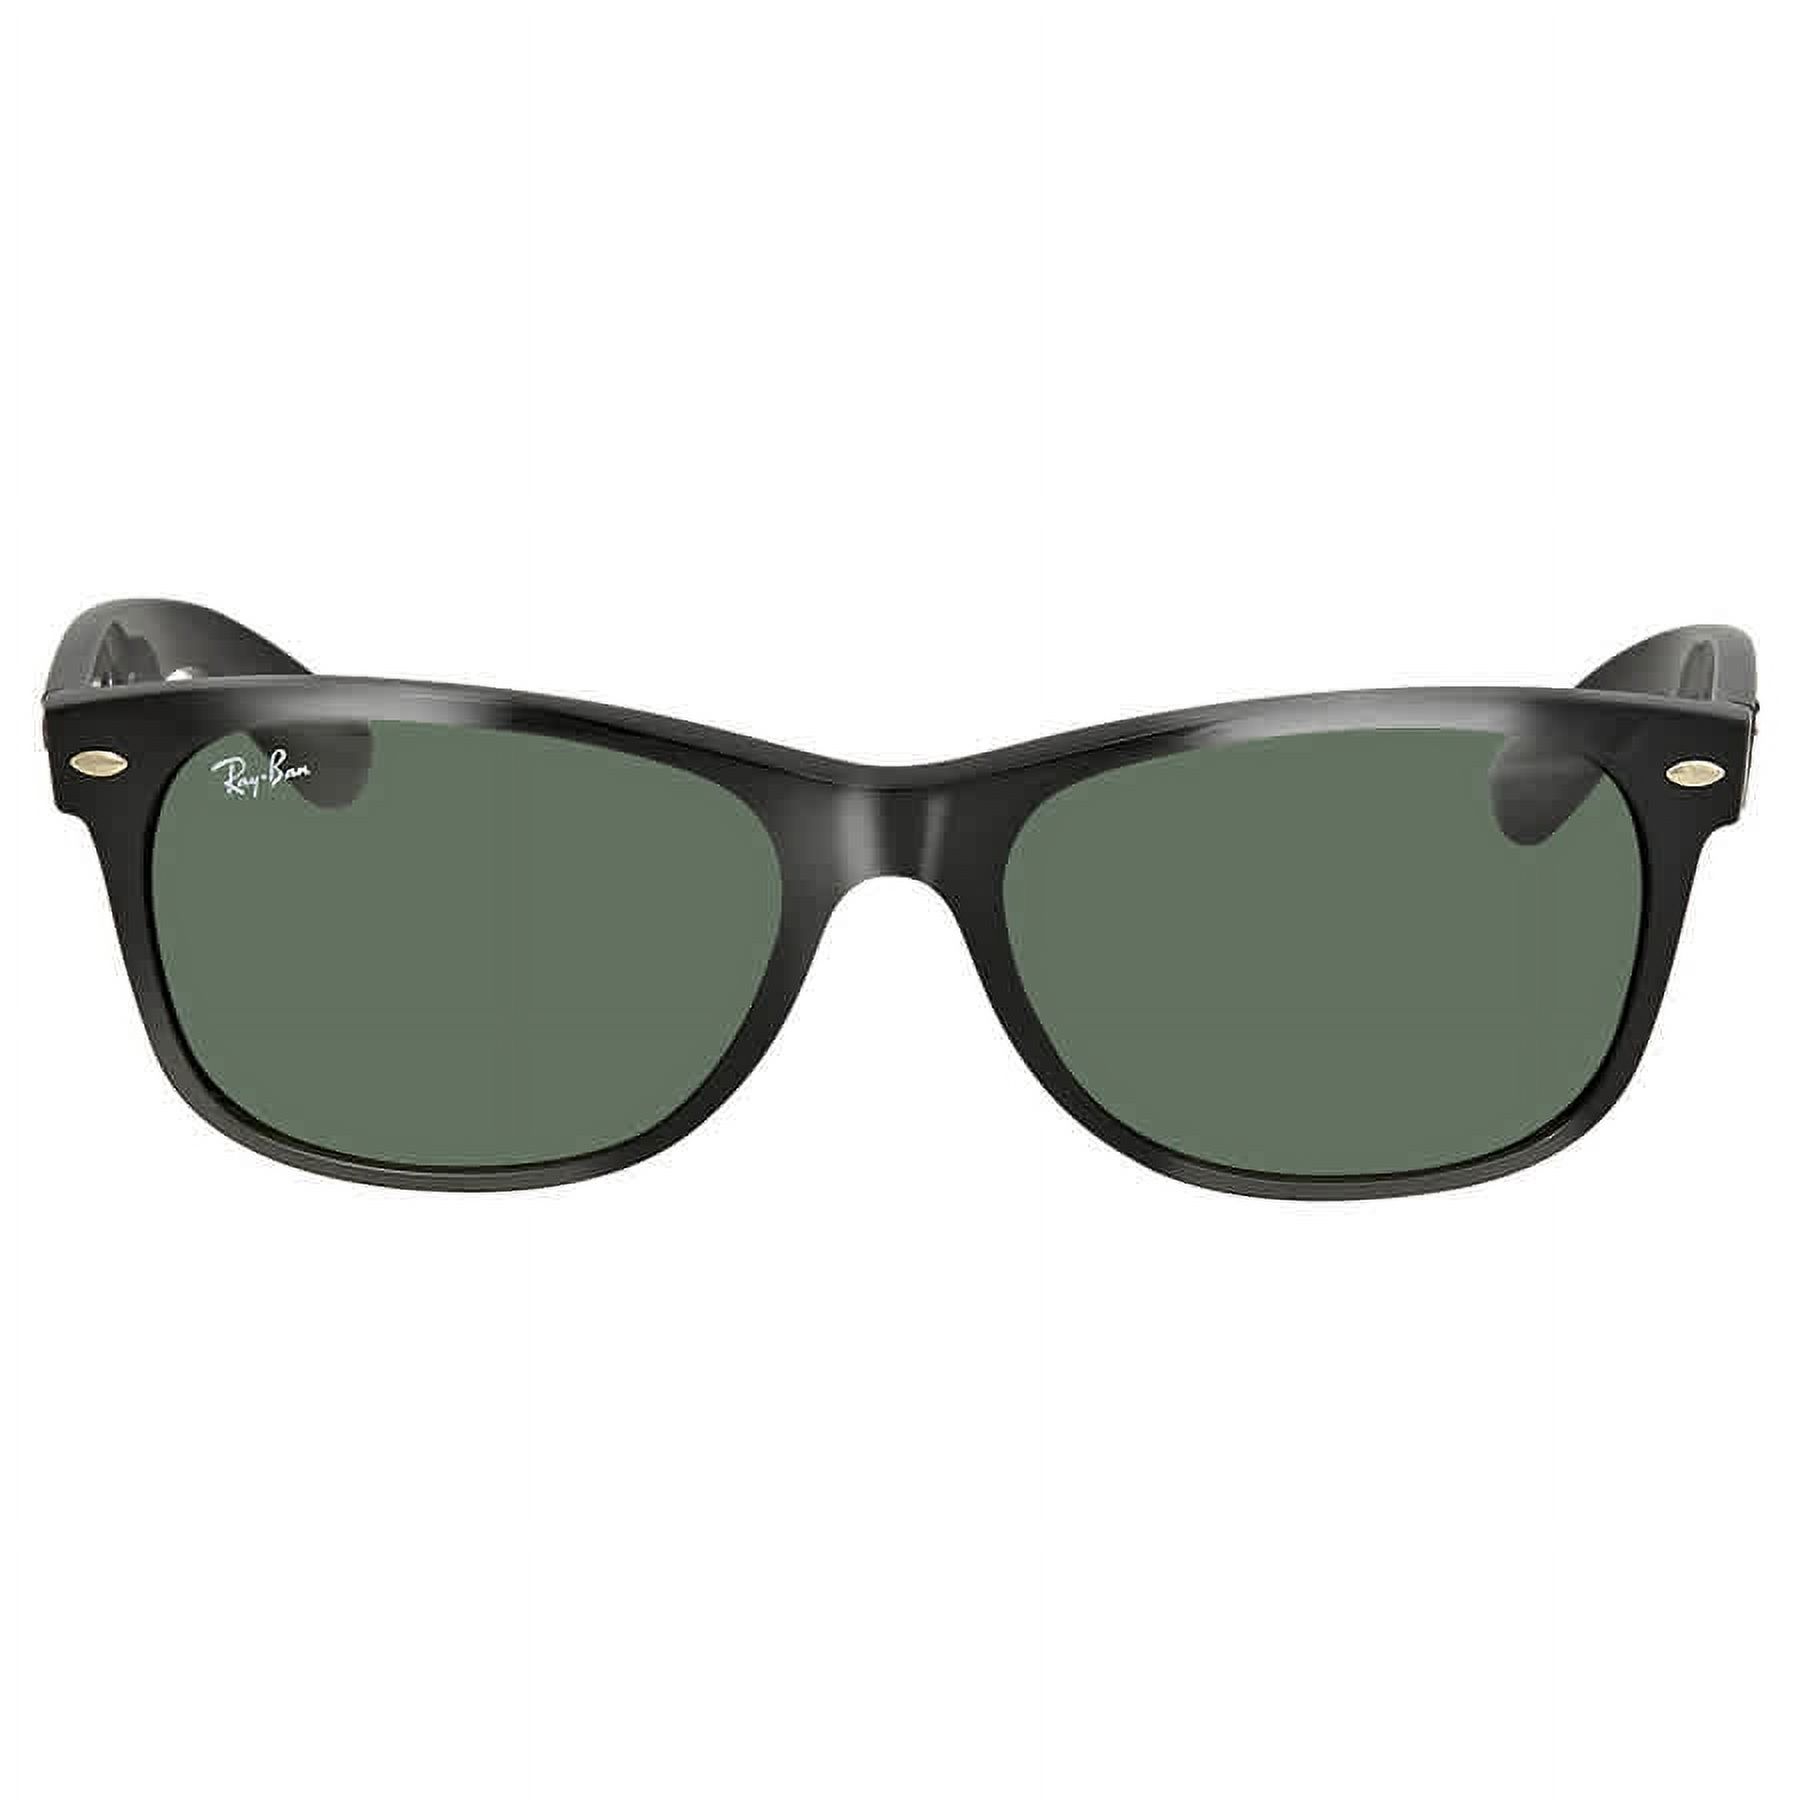 Ray Ban New Wayfarer Classic Green Classic G-15 Unisex Sunglasses RB2132 901L 55 - image 1 of 3